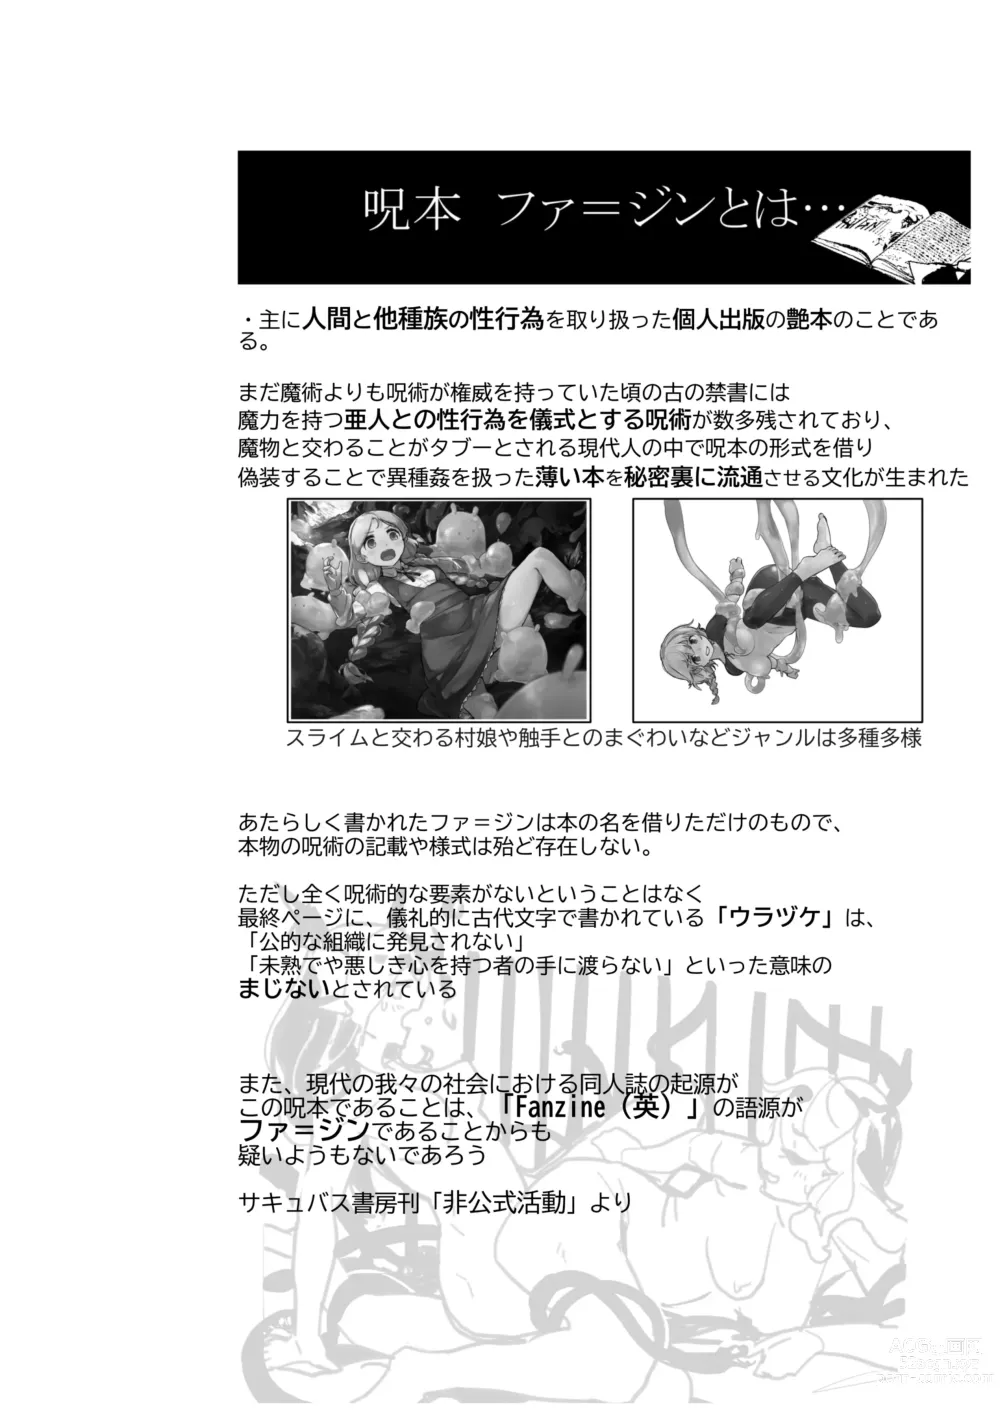 Page 3 of doujinshi Slime Hunter Nina no Juhon (Fa Zin) Vol. 1